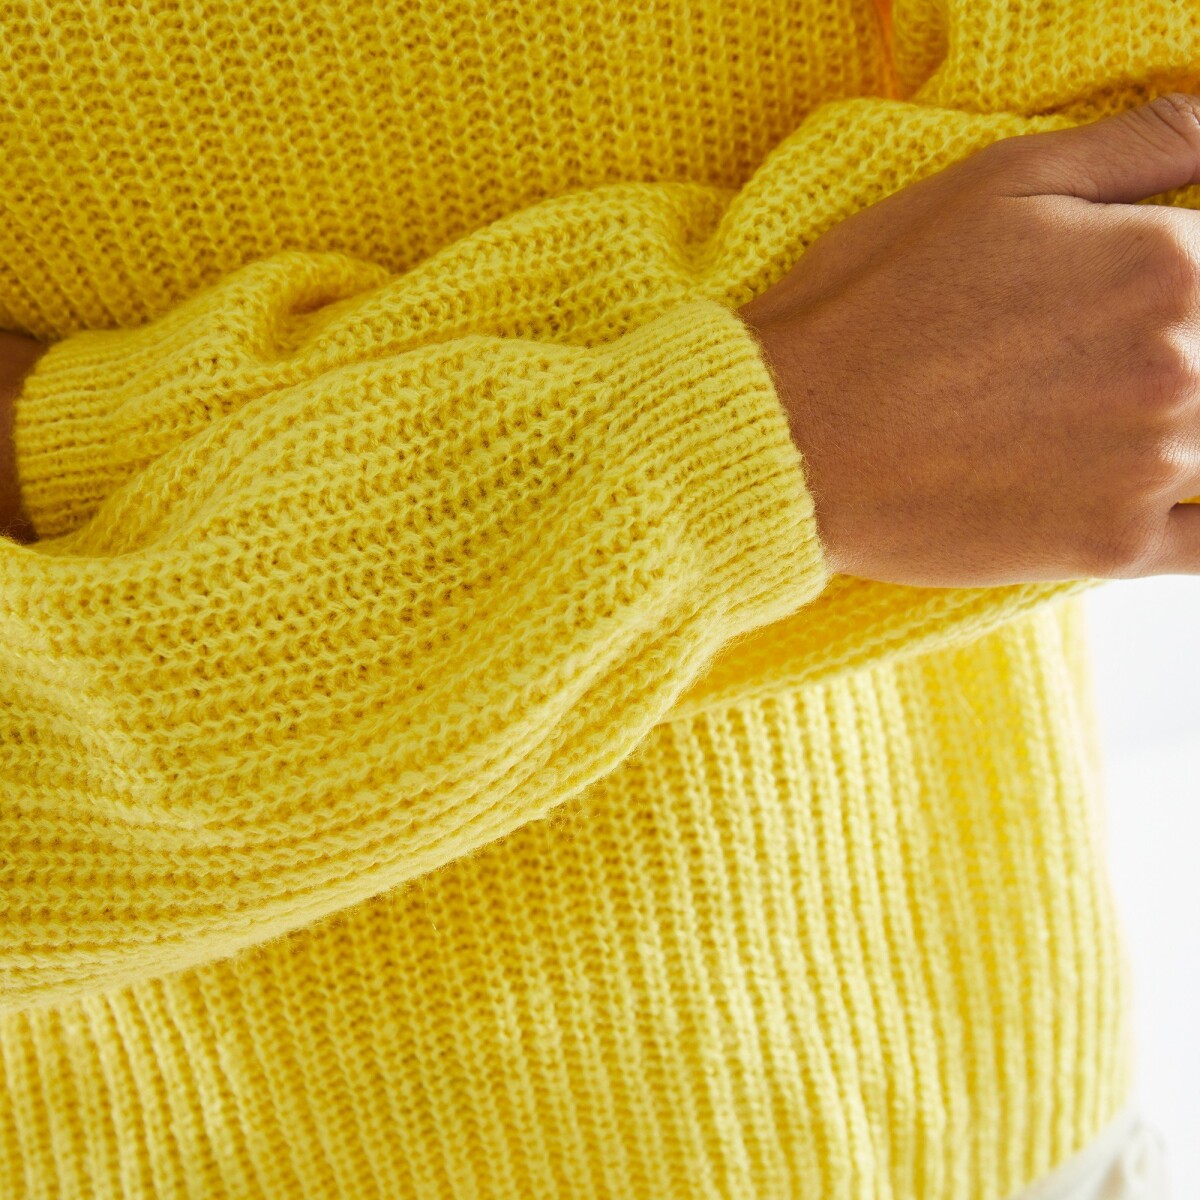 Jednobarevný pulovr s lodičkovým výstřihem a dlouhými rukávy